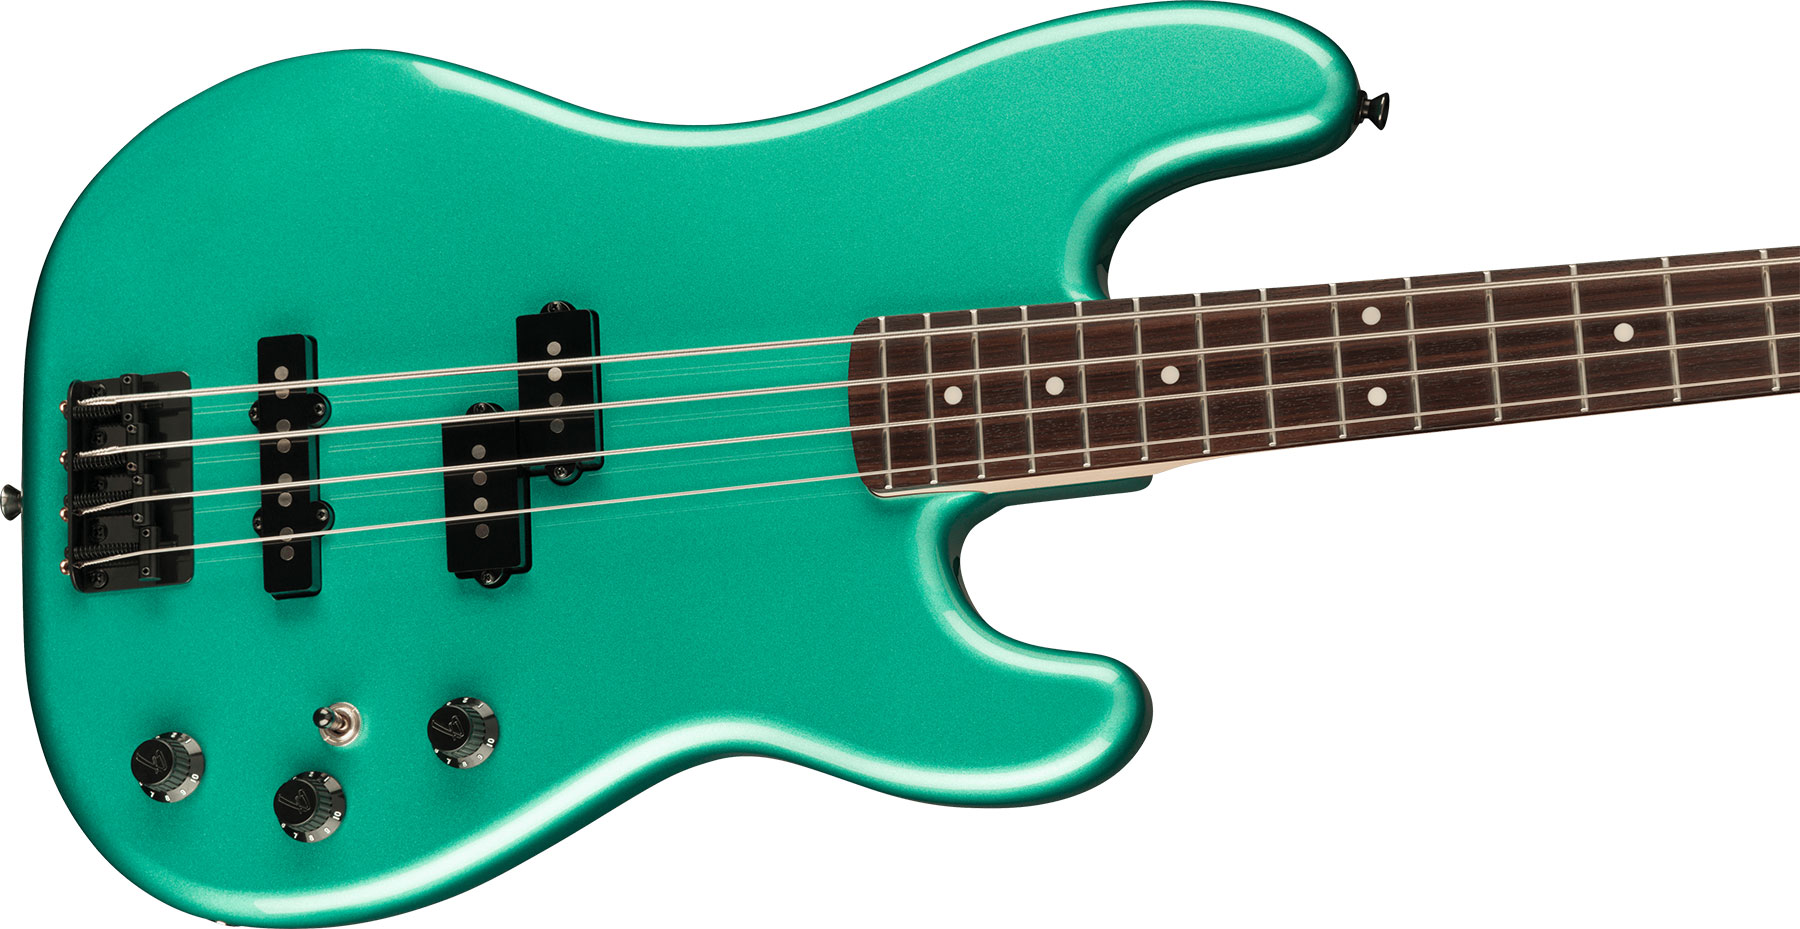 Fender Precision Bass Pj Boxer Jap Rw - Sherwood Green Metallic - Basse Électrique Solid Body - Variation 2